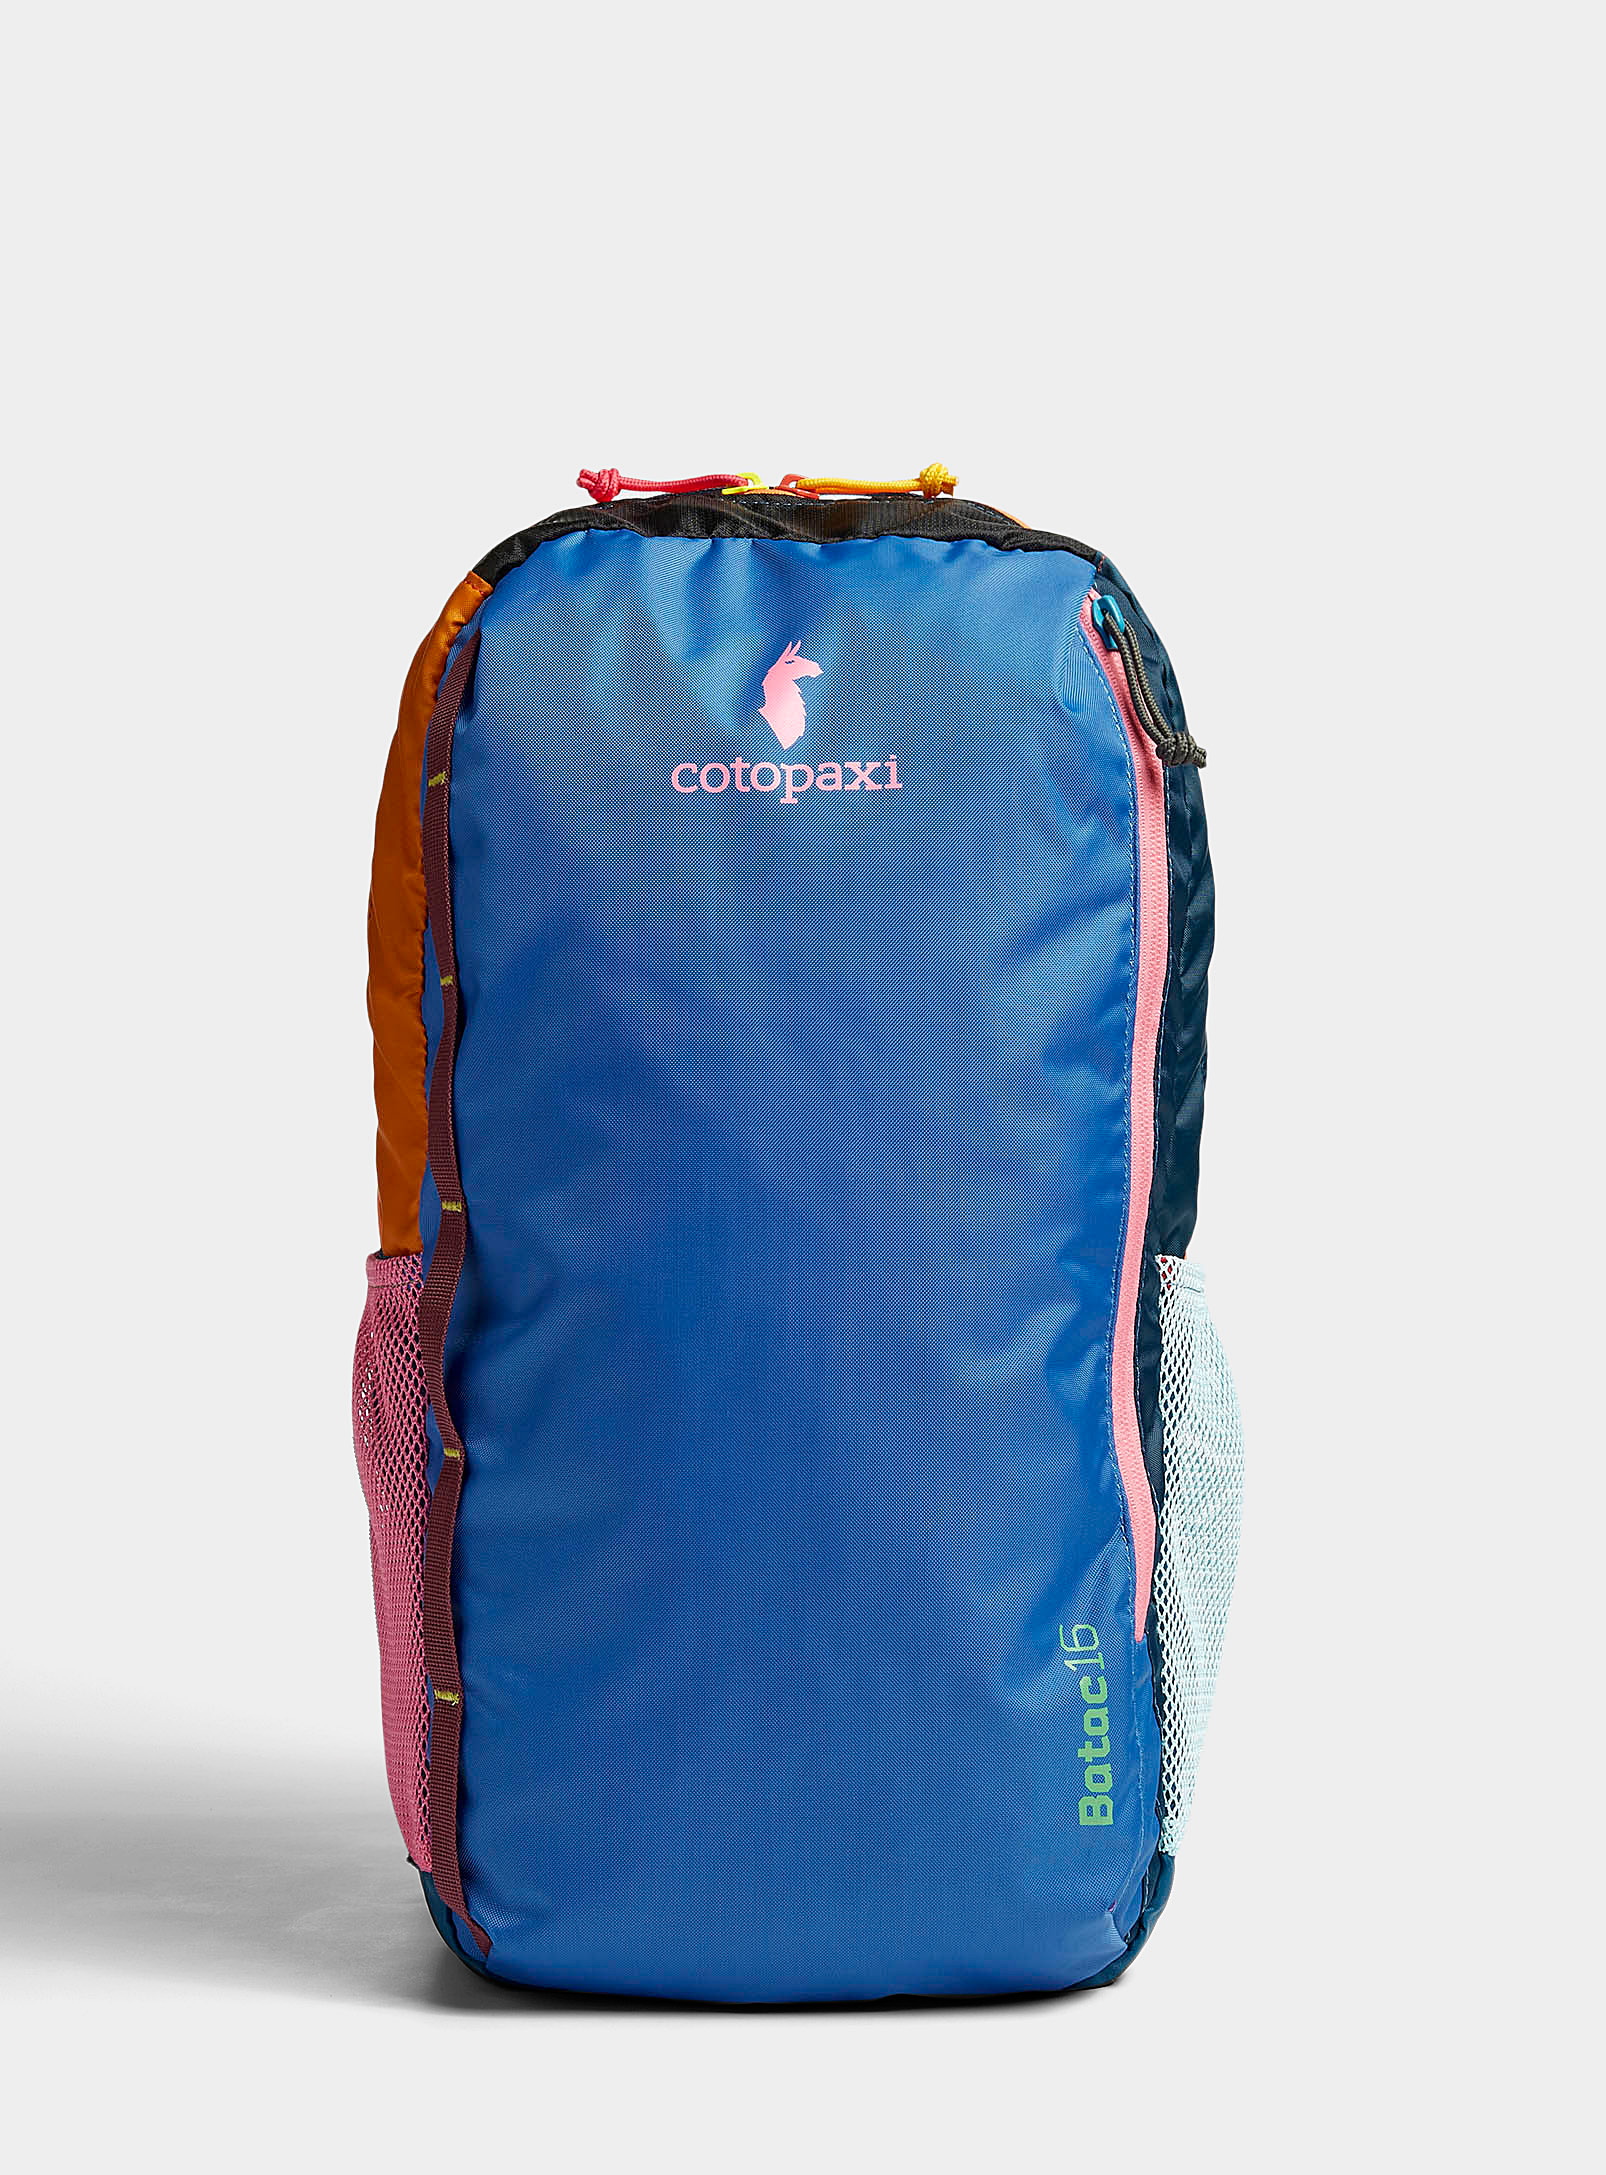 Cotopaxi - Men's Batac 16L backpack | Galeries de la Capitale